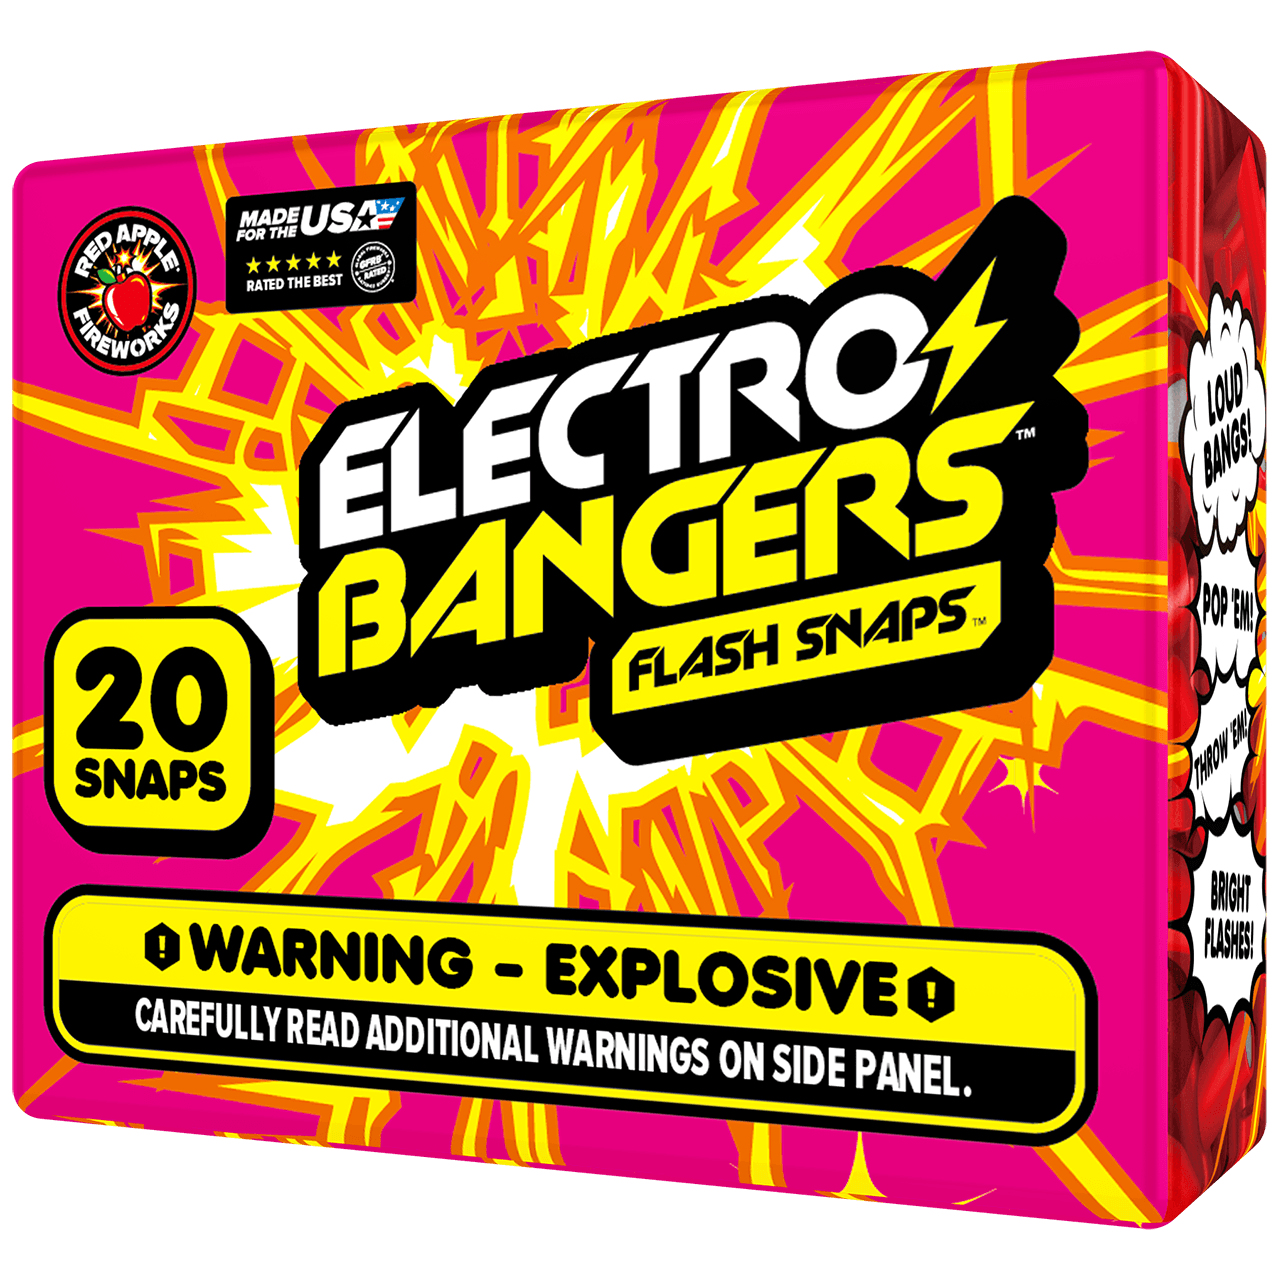 Electro Bangers™ Flash Snaps